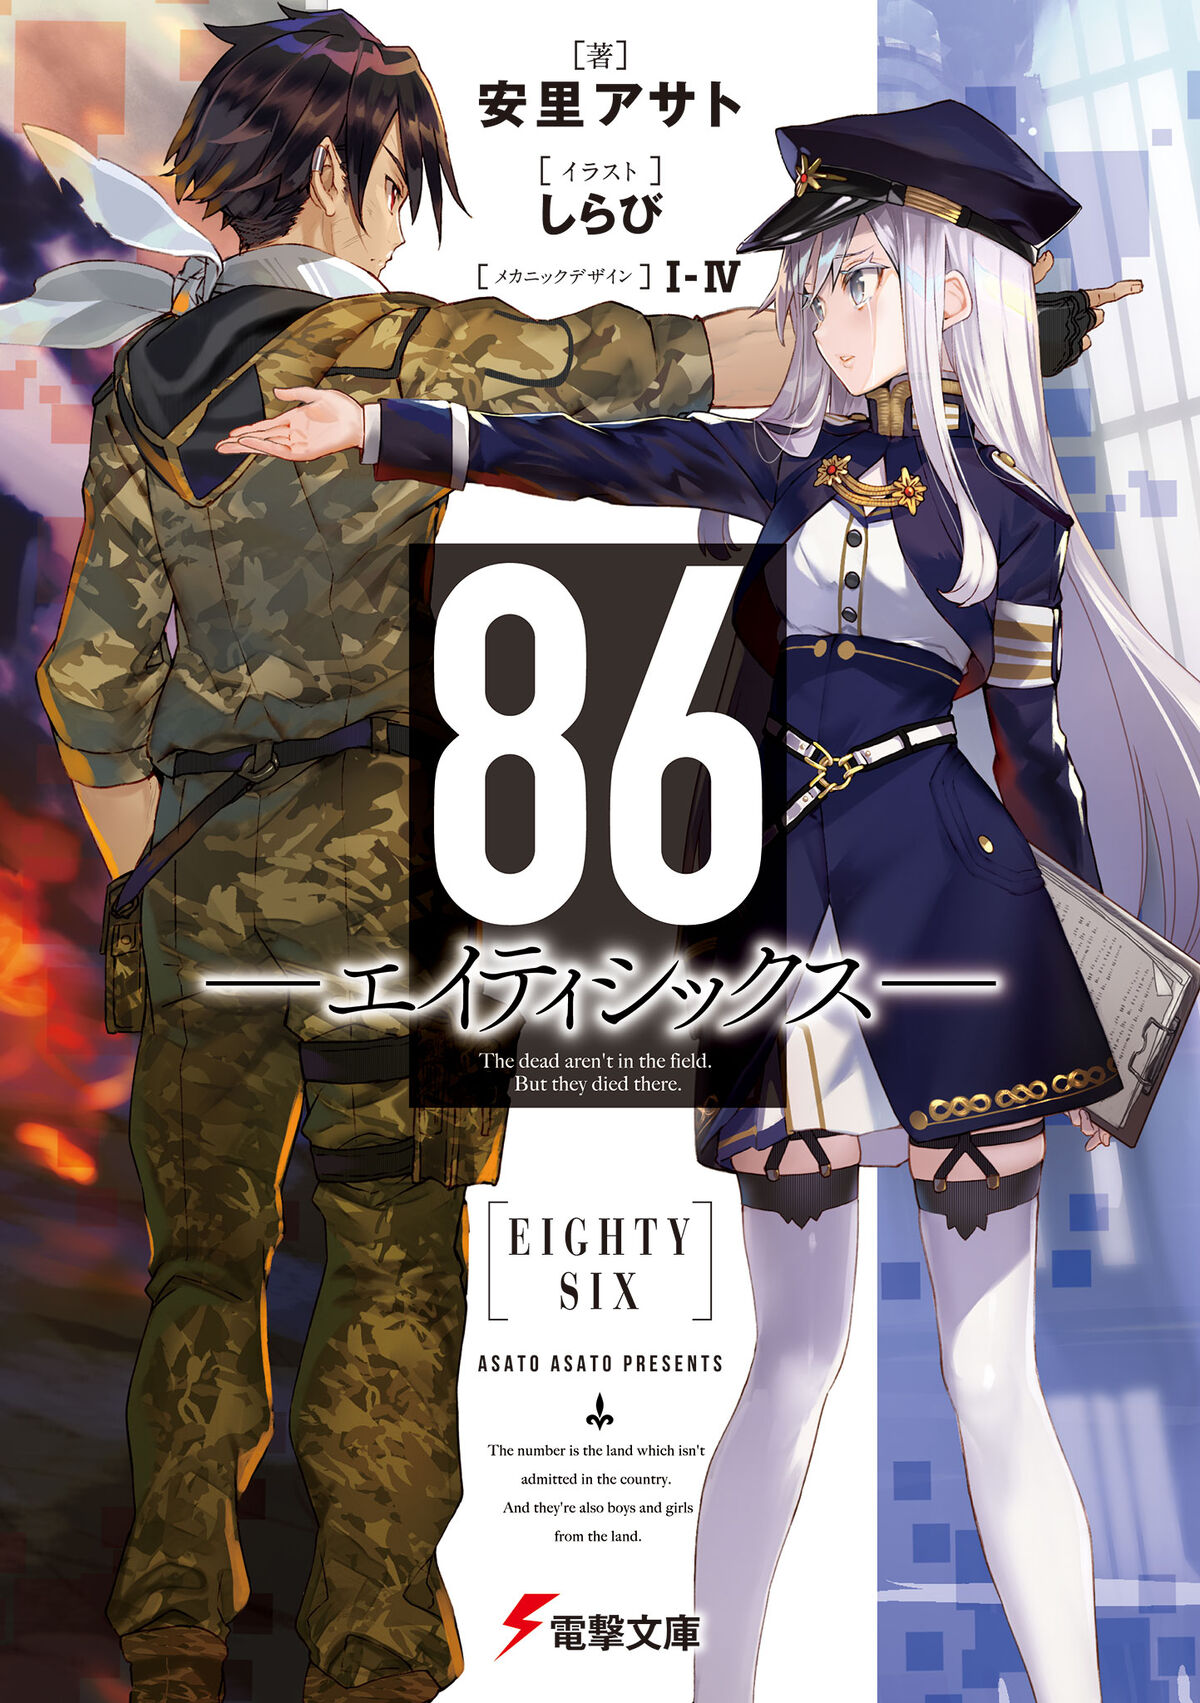 Light Novel Volume 1 | 86 - Eighty Six - Wiki | Fandom